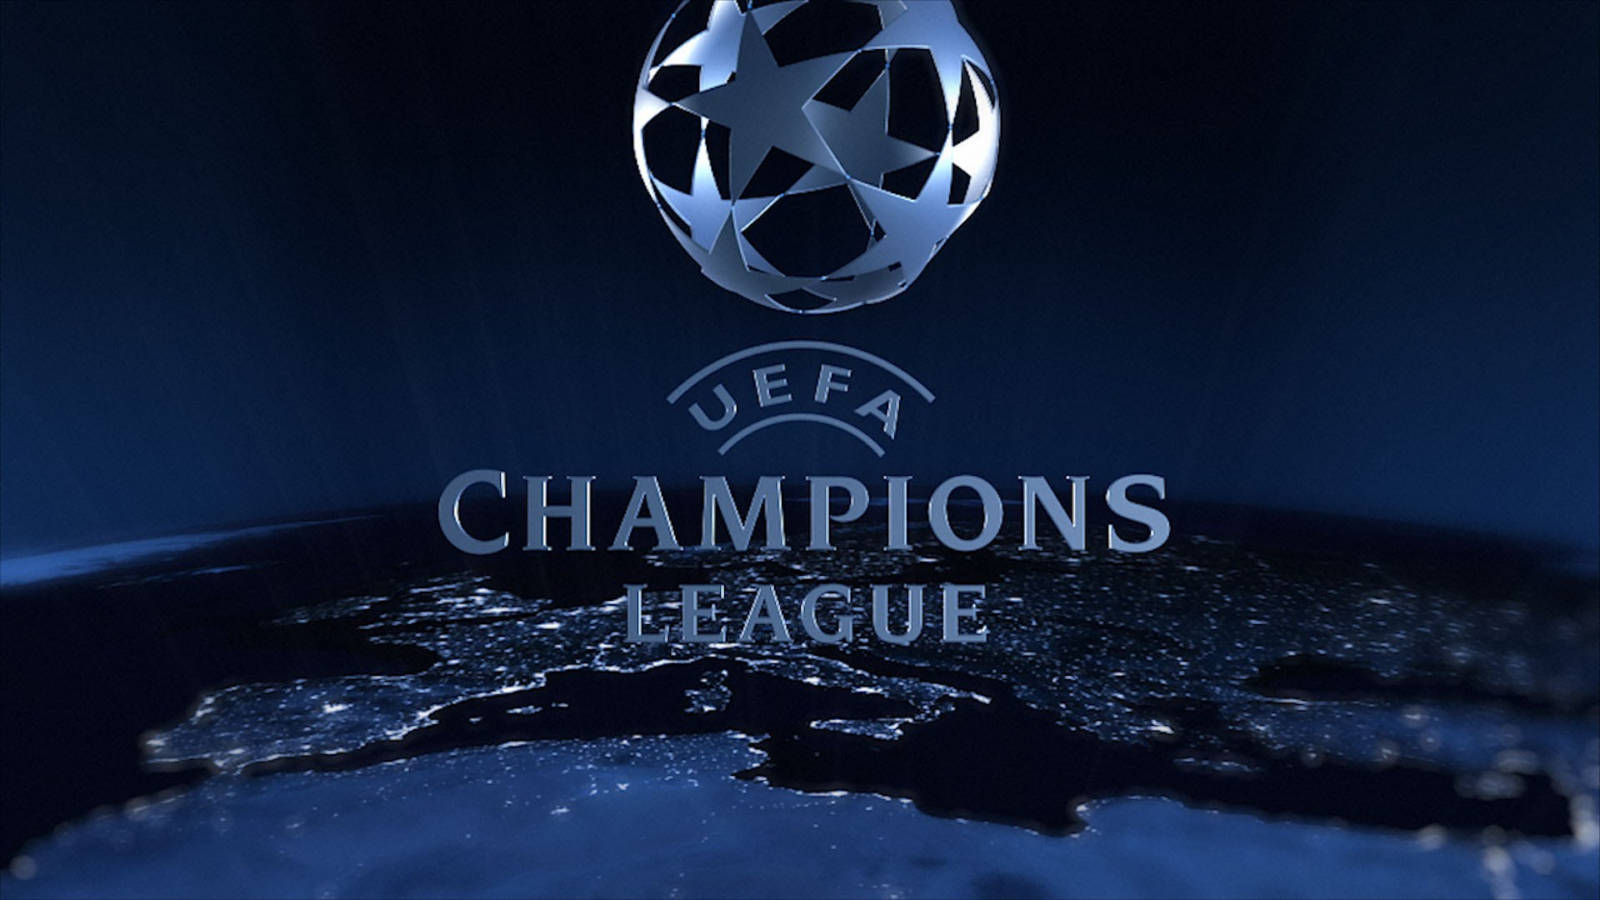 Uefa Champions League Competition Club Wallpaper